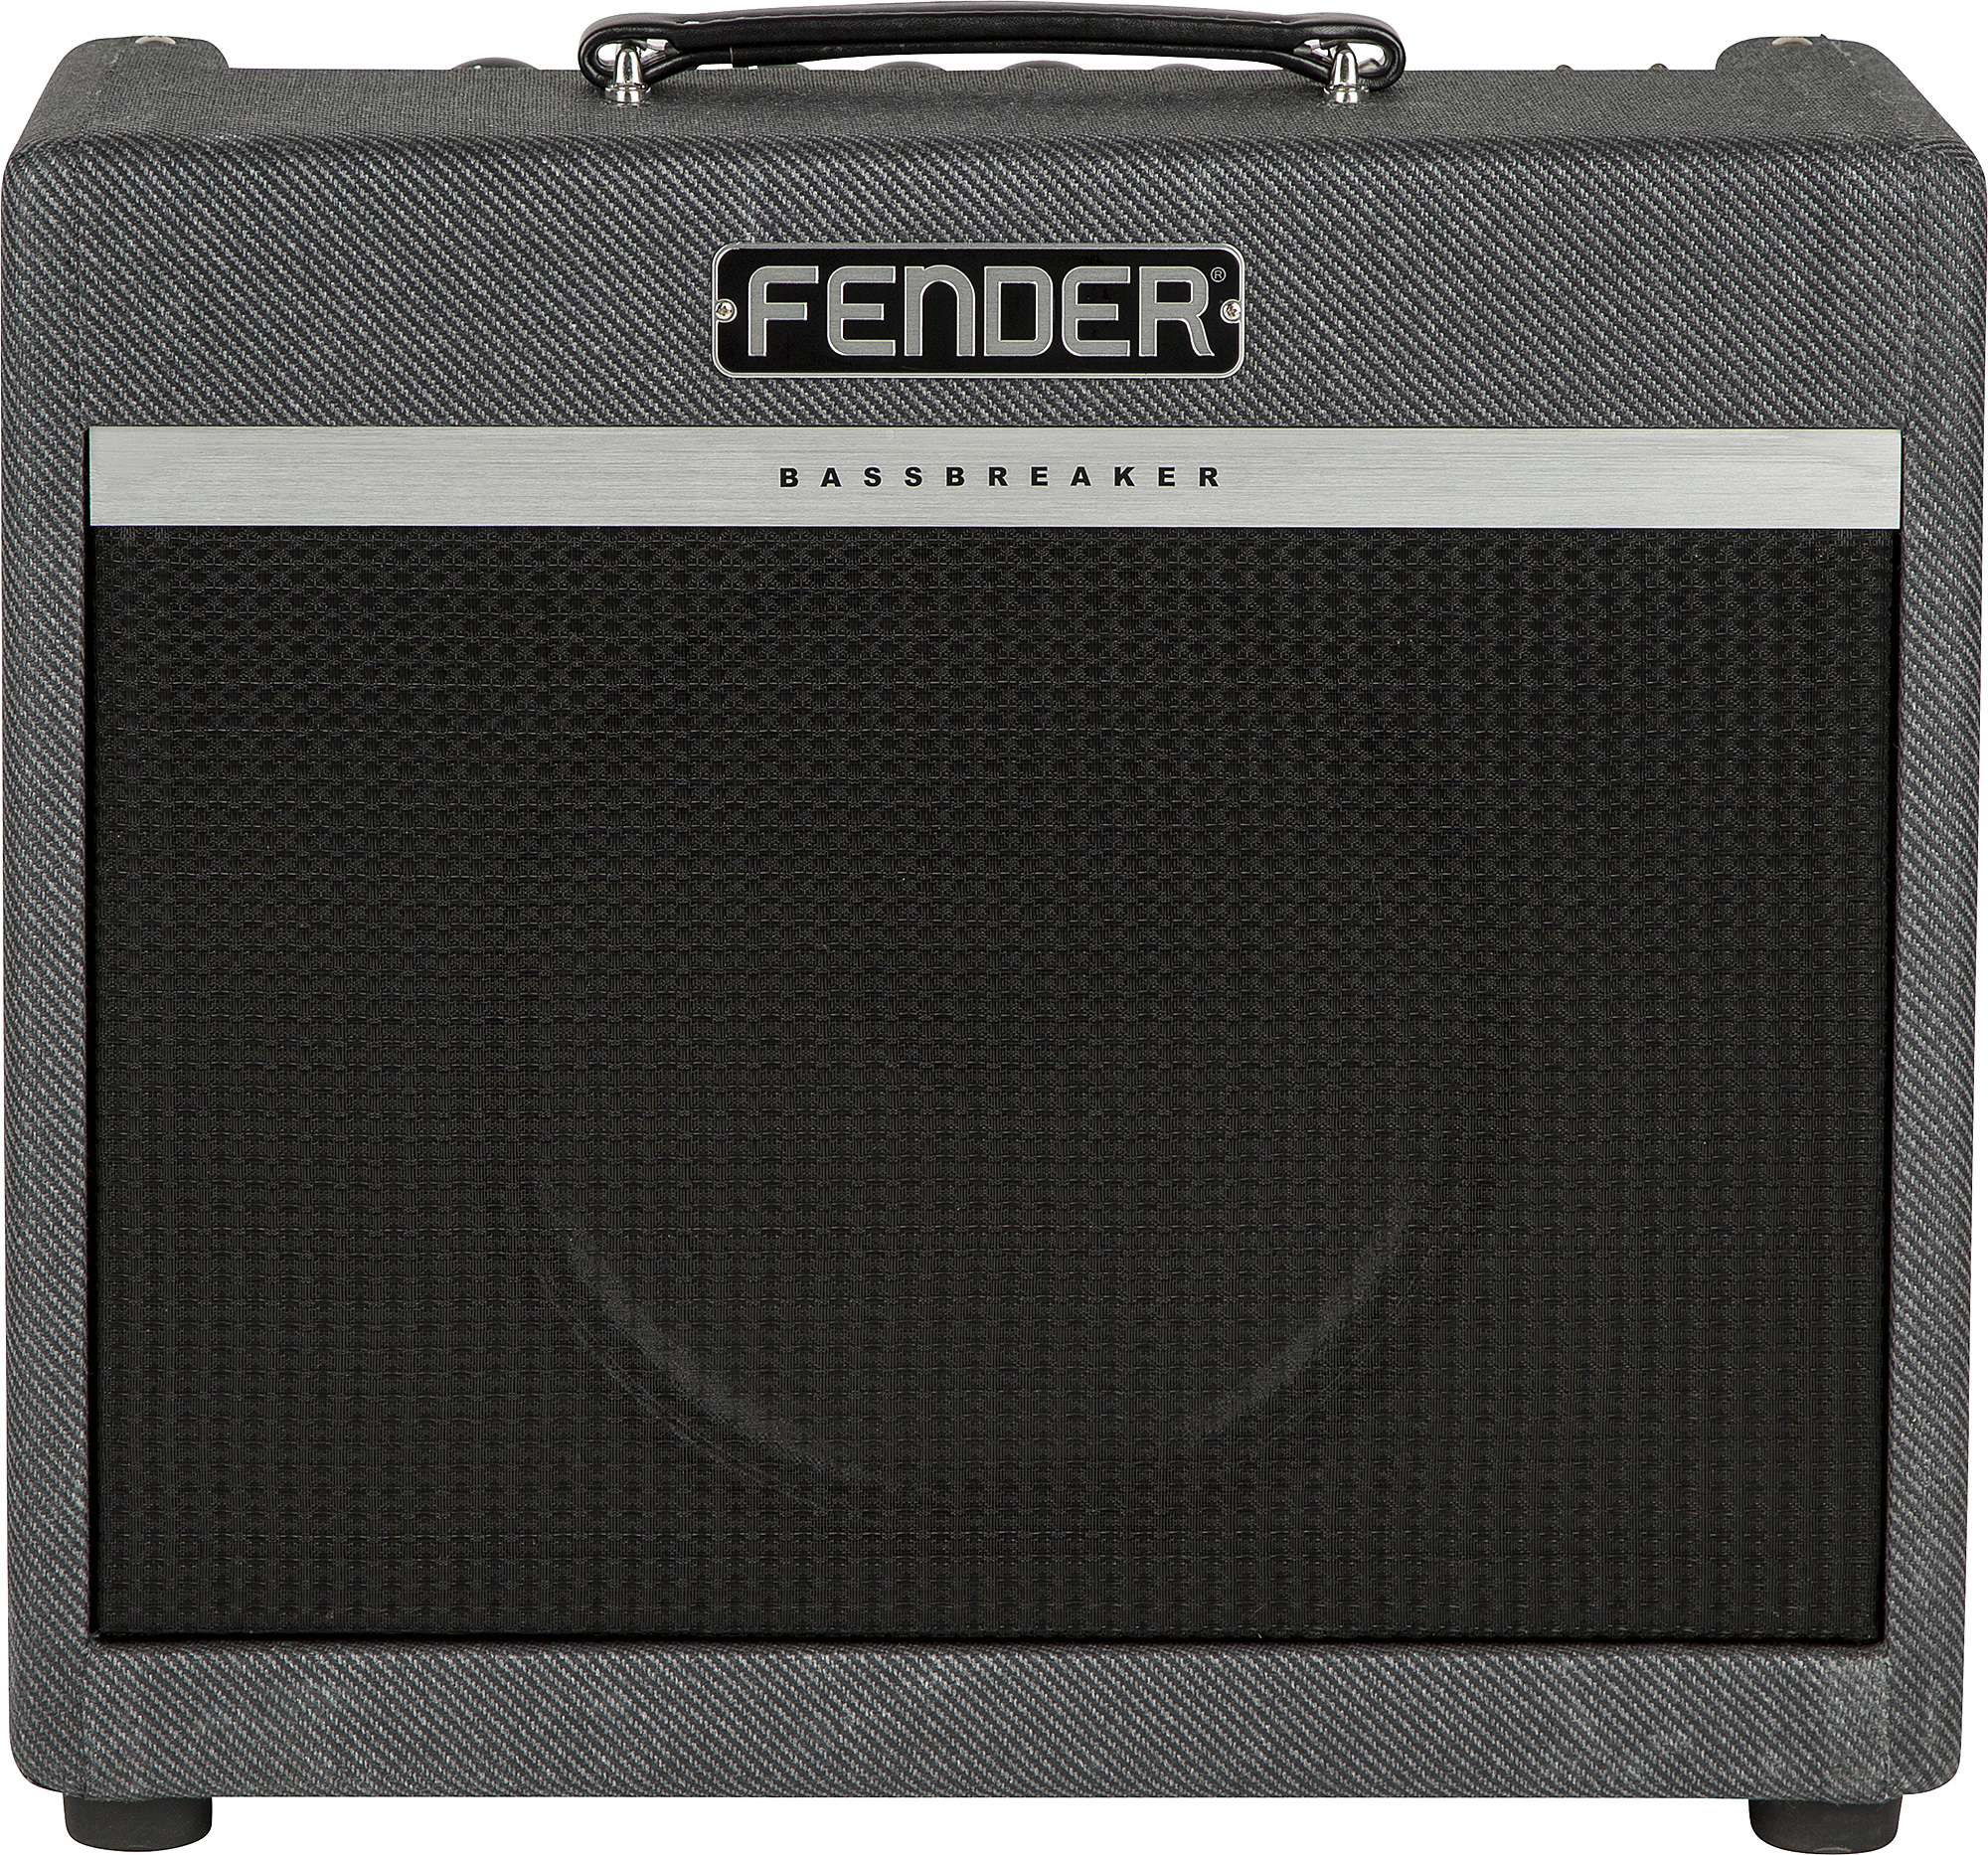 Fender Bassbreaker 15 Combo 15w 1x12 Gray Tweed - Ampli Guitare Électrique Combo - Main picture